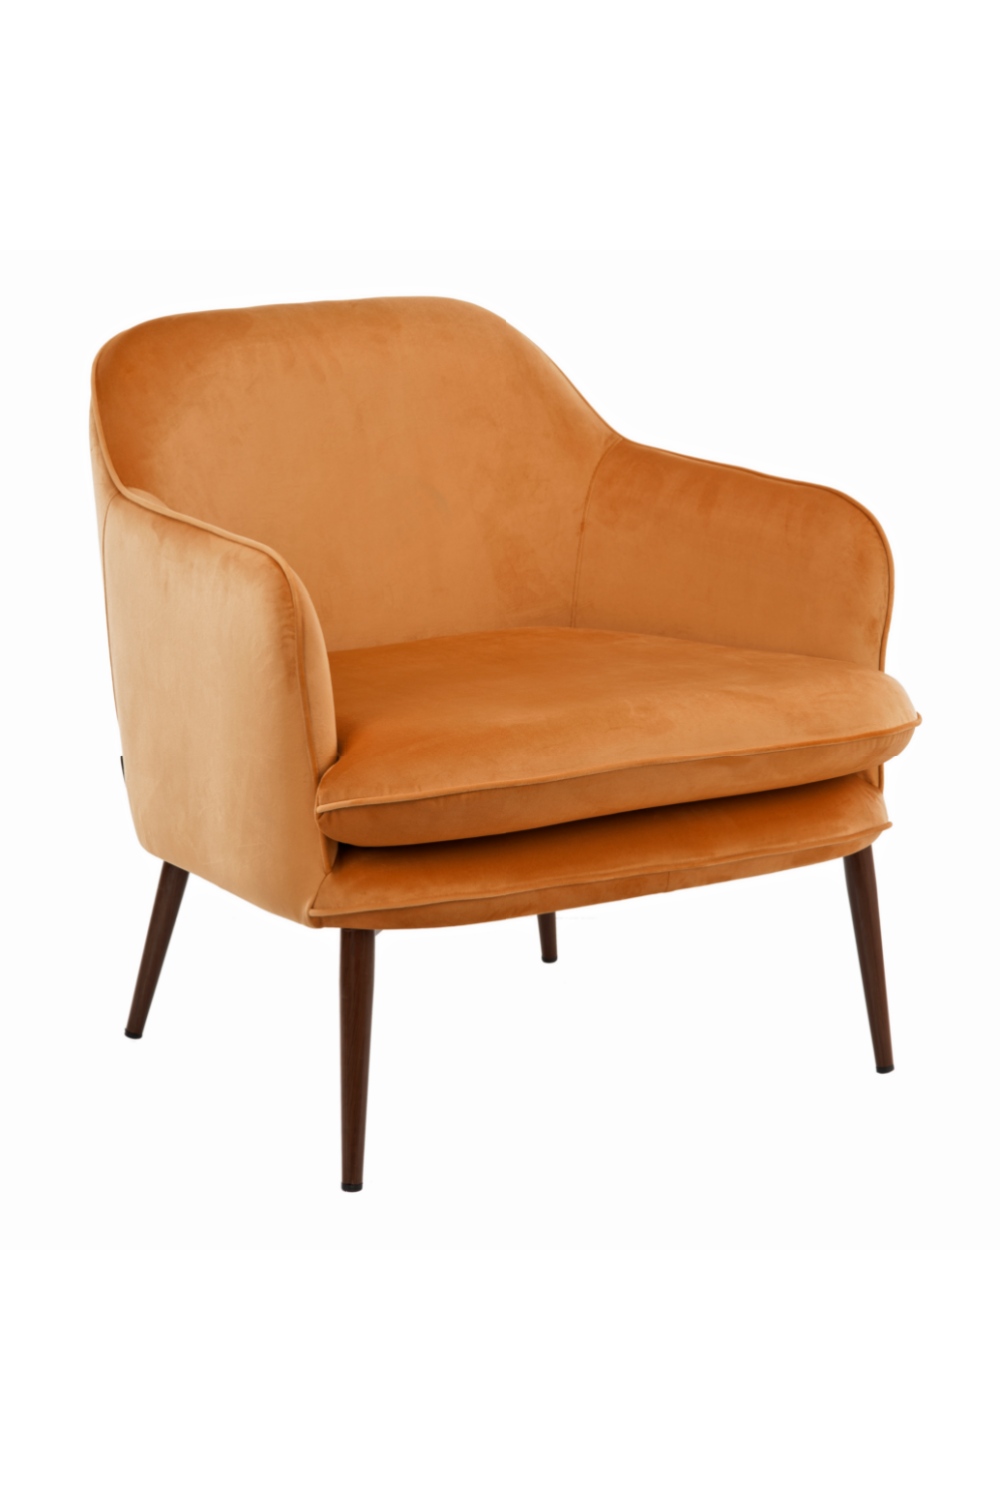 koud vertaler droogte Velvet Upholstered Fauteuil | Pols Potten Charmy | Dutch Furniture